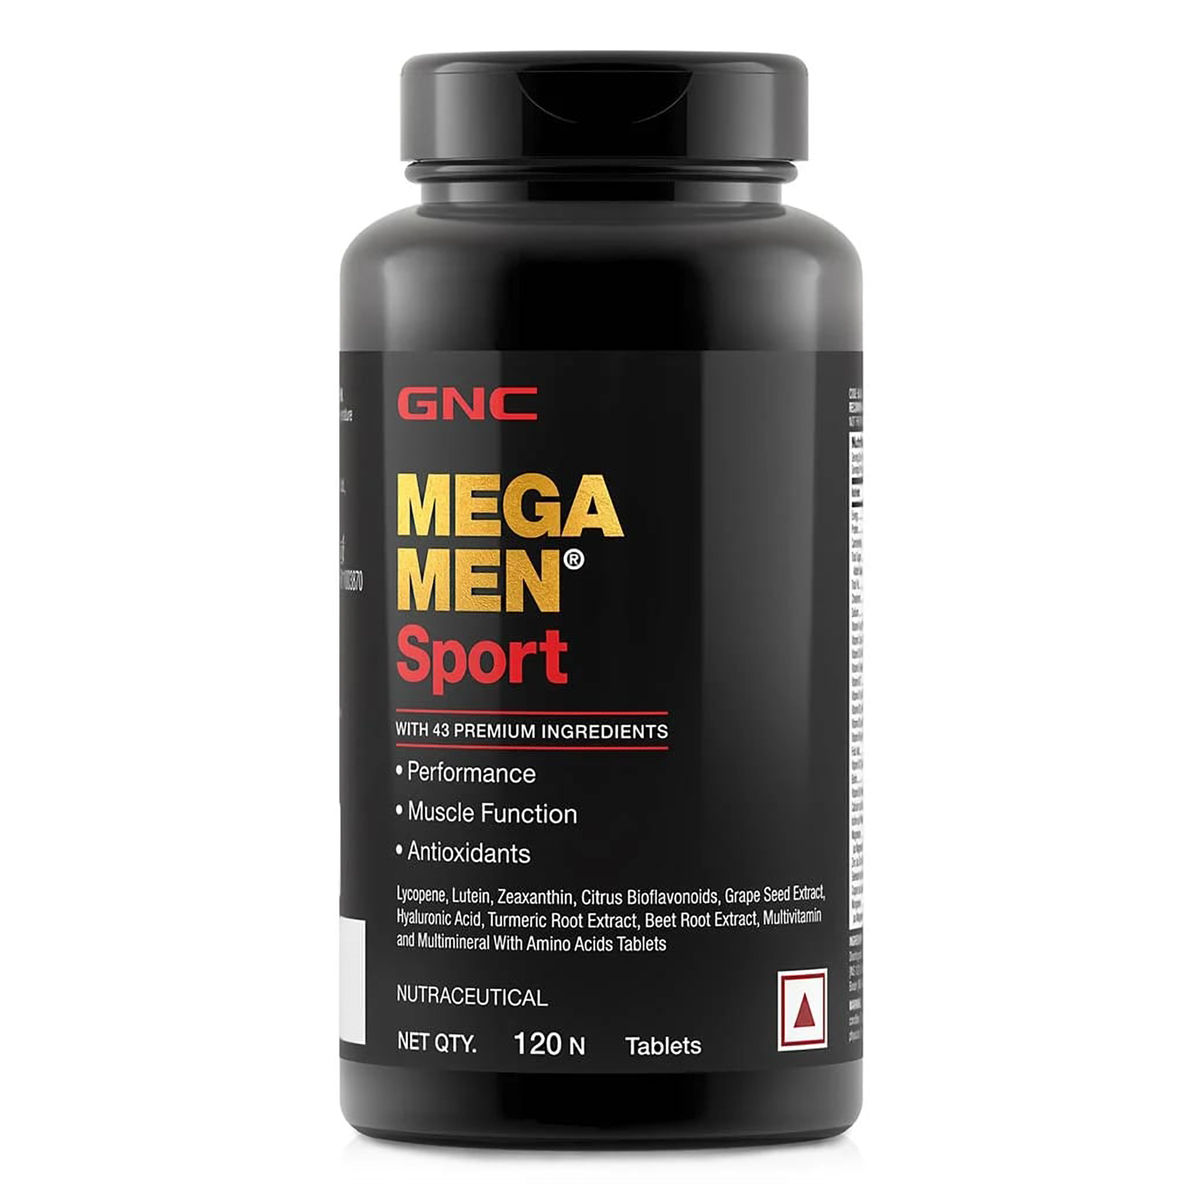 Buy GNC Mega Men Sport with 43 Premium Ingredients, 120 Tablets Online